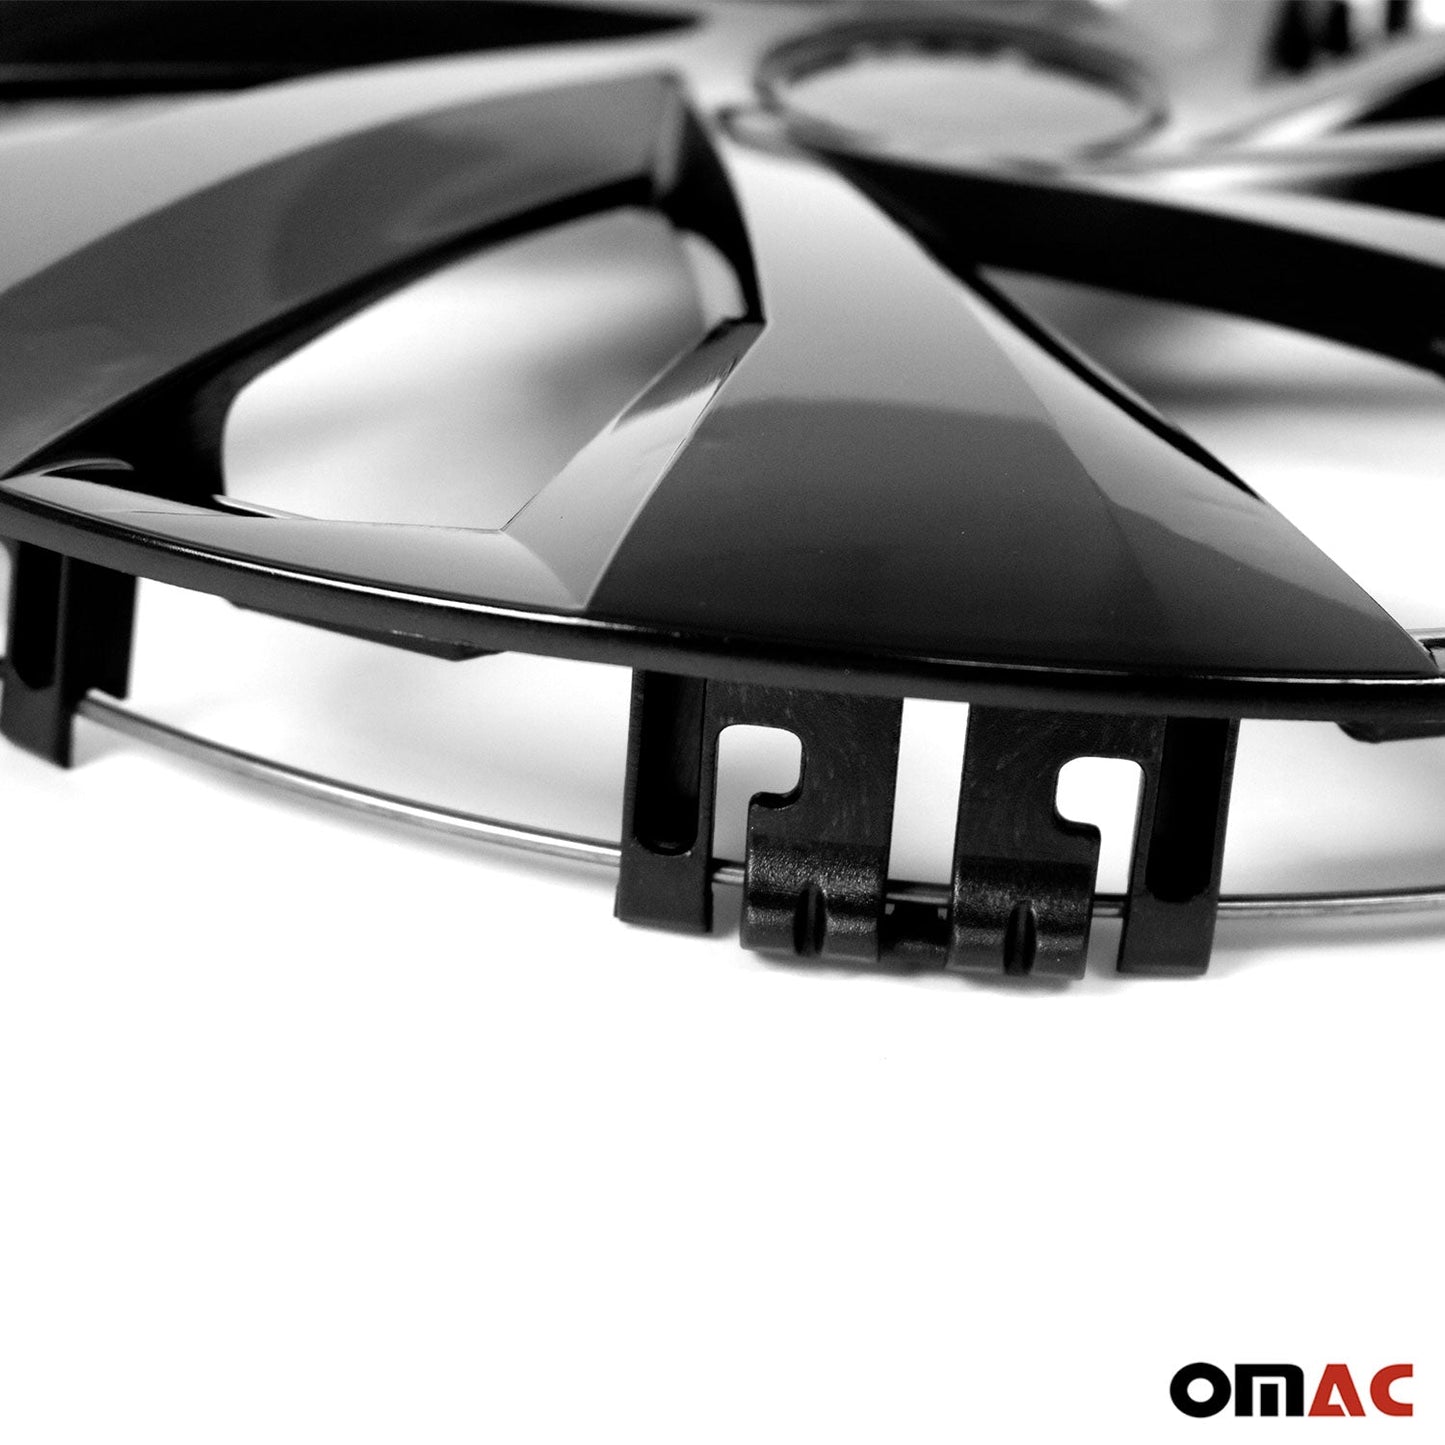 OMAC 15 Inch Wheel Rim Covers Hubcaps for Alfa Romeo Black Gloss G002448